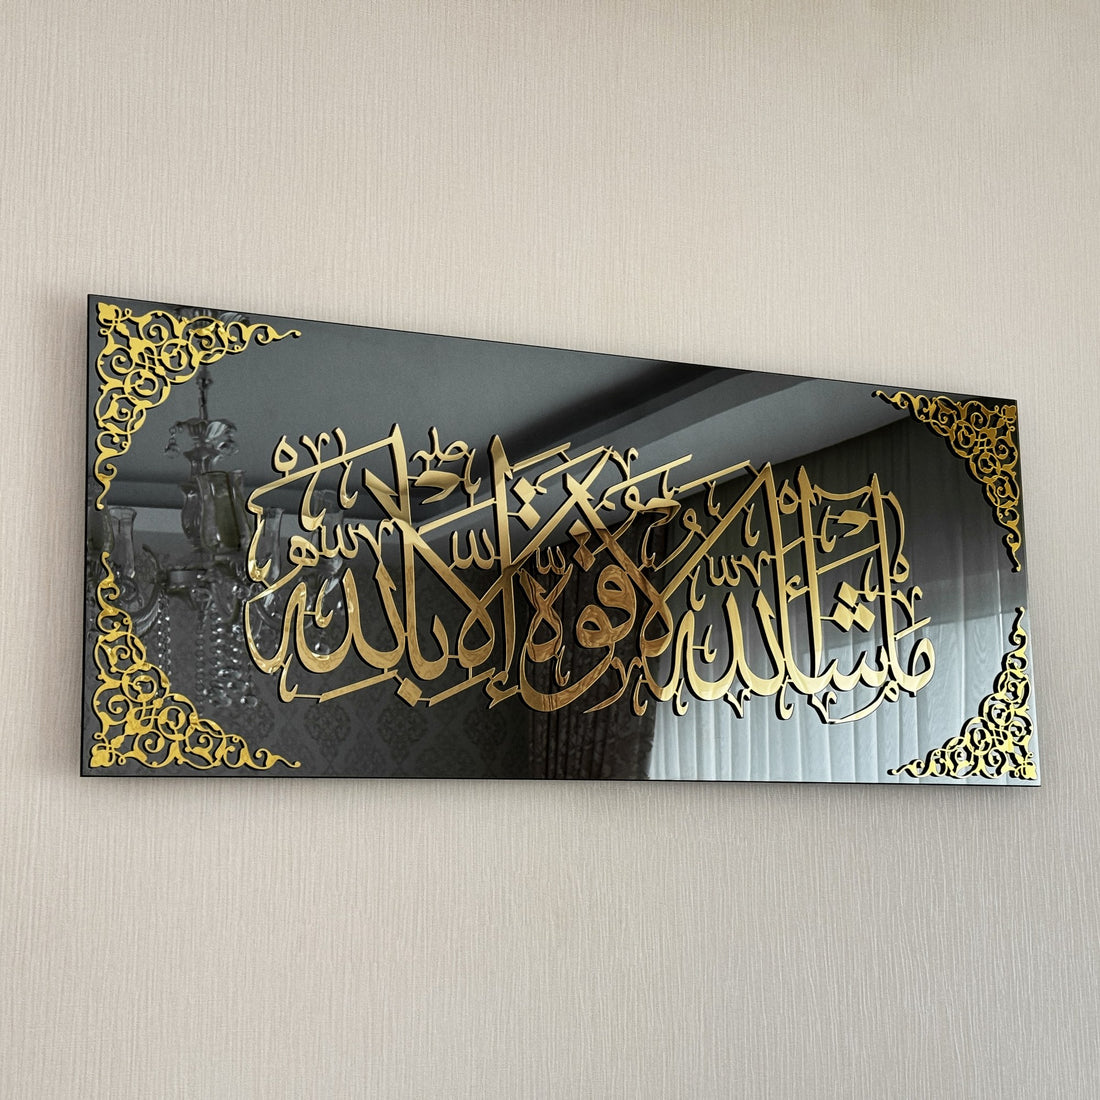 islamic-glass-mashallah-la-quwwata-illa-bi-llahi-glass-islamic-wall-art-islamic-calligraphy-inspirational-artwork-shukranislamicarts